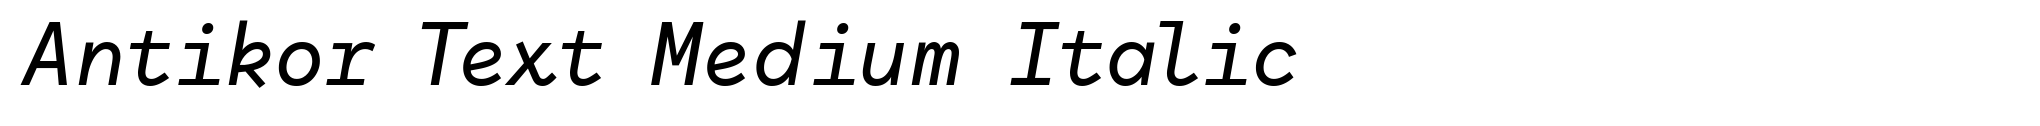 Antikor Text Medium Italic image